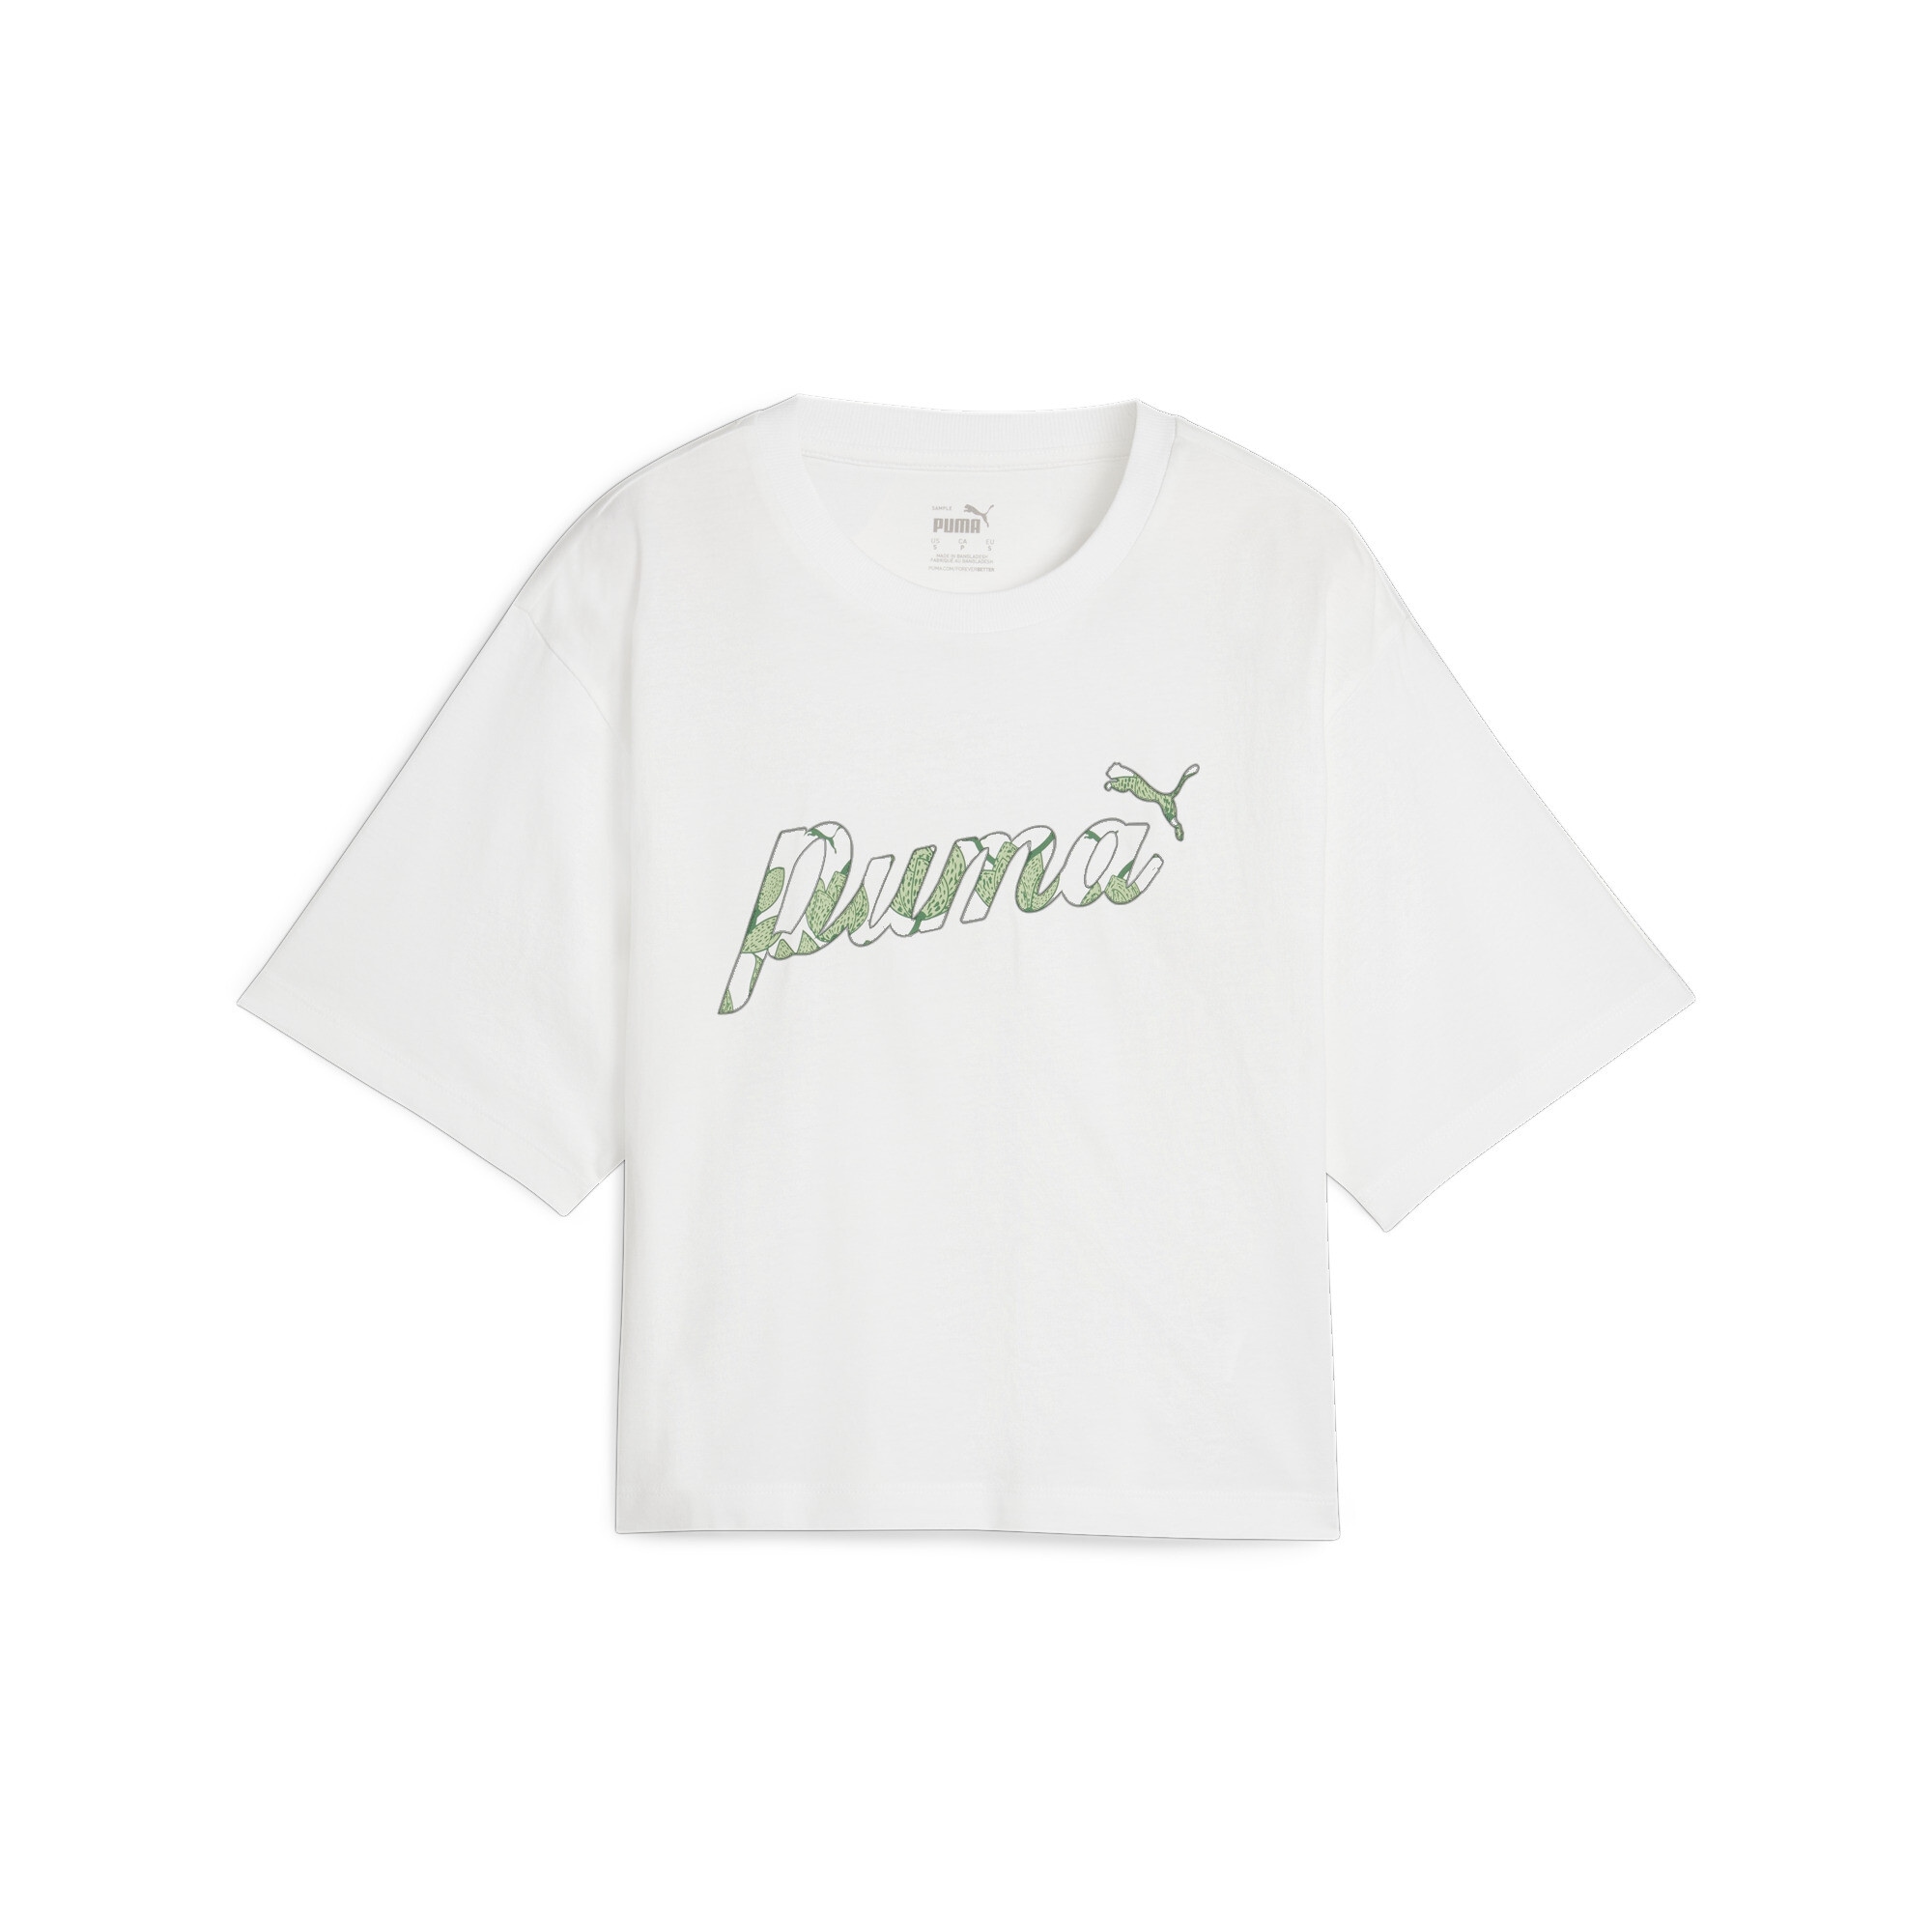 »BLOSSOM | walking online Damen« Graphic PUMA T-Shirt Kurzes T-Shirt kaufen I\'m